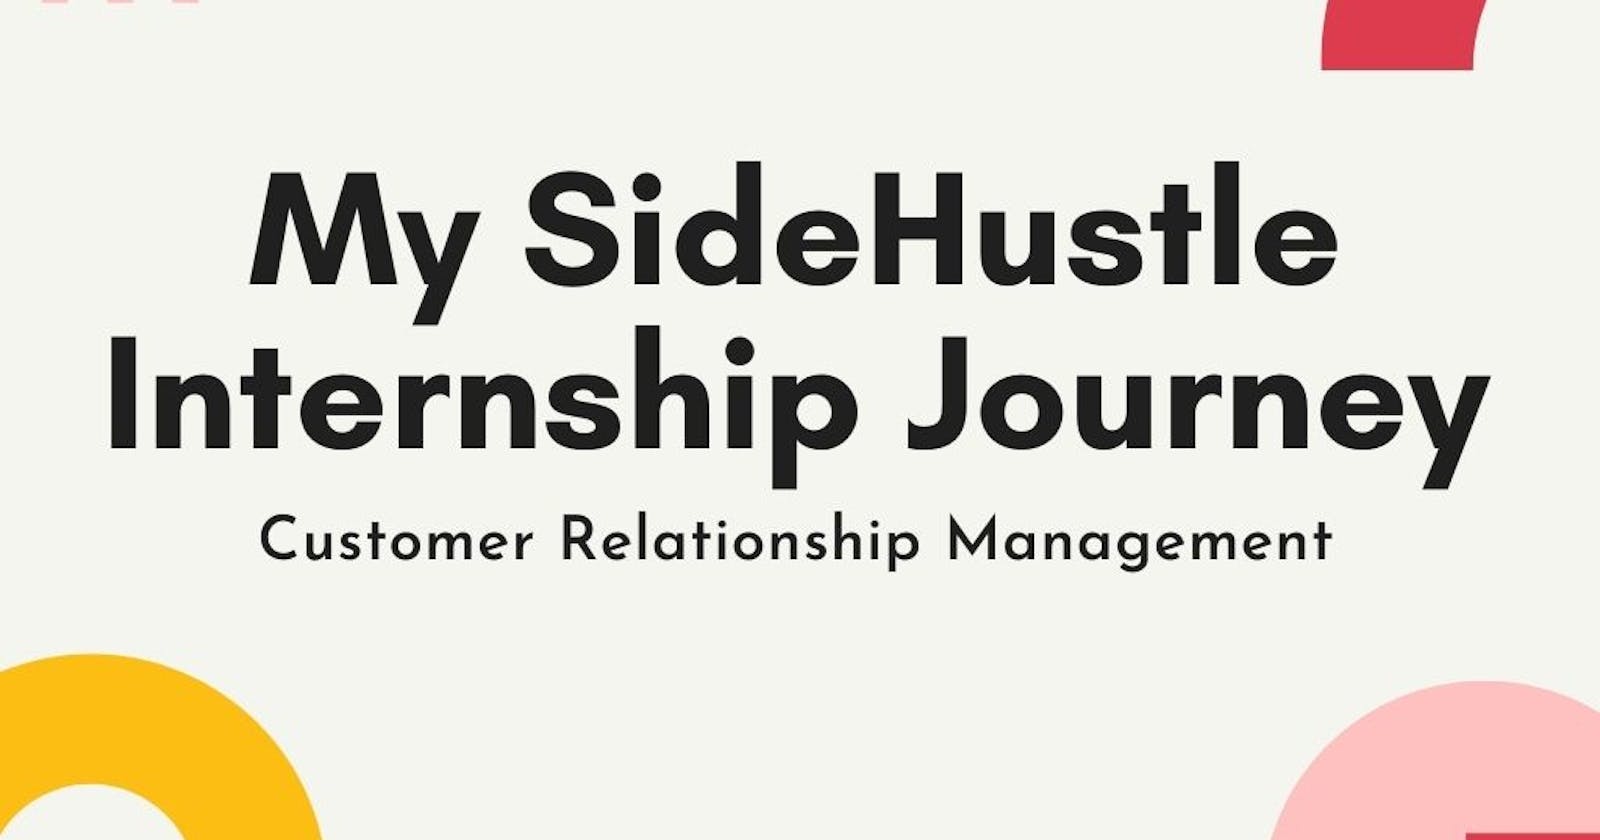 My SideHustle Internship Journey